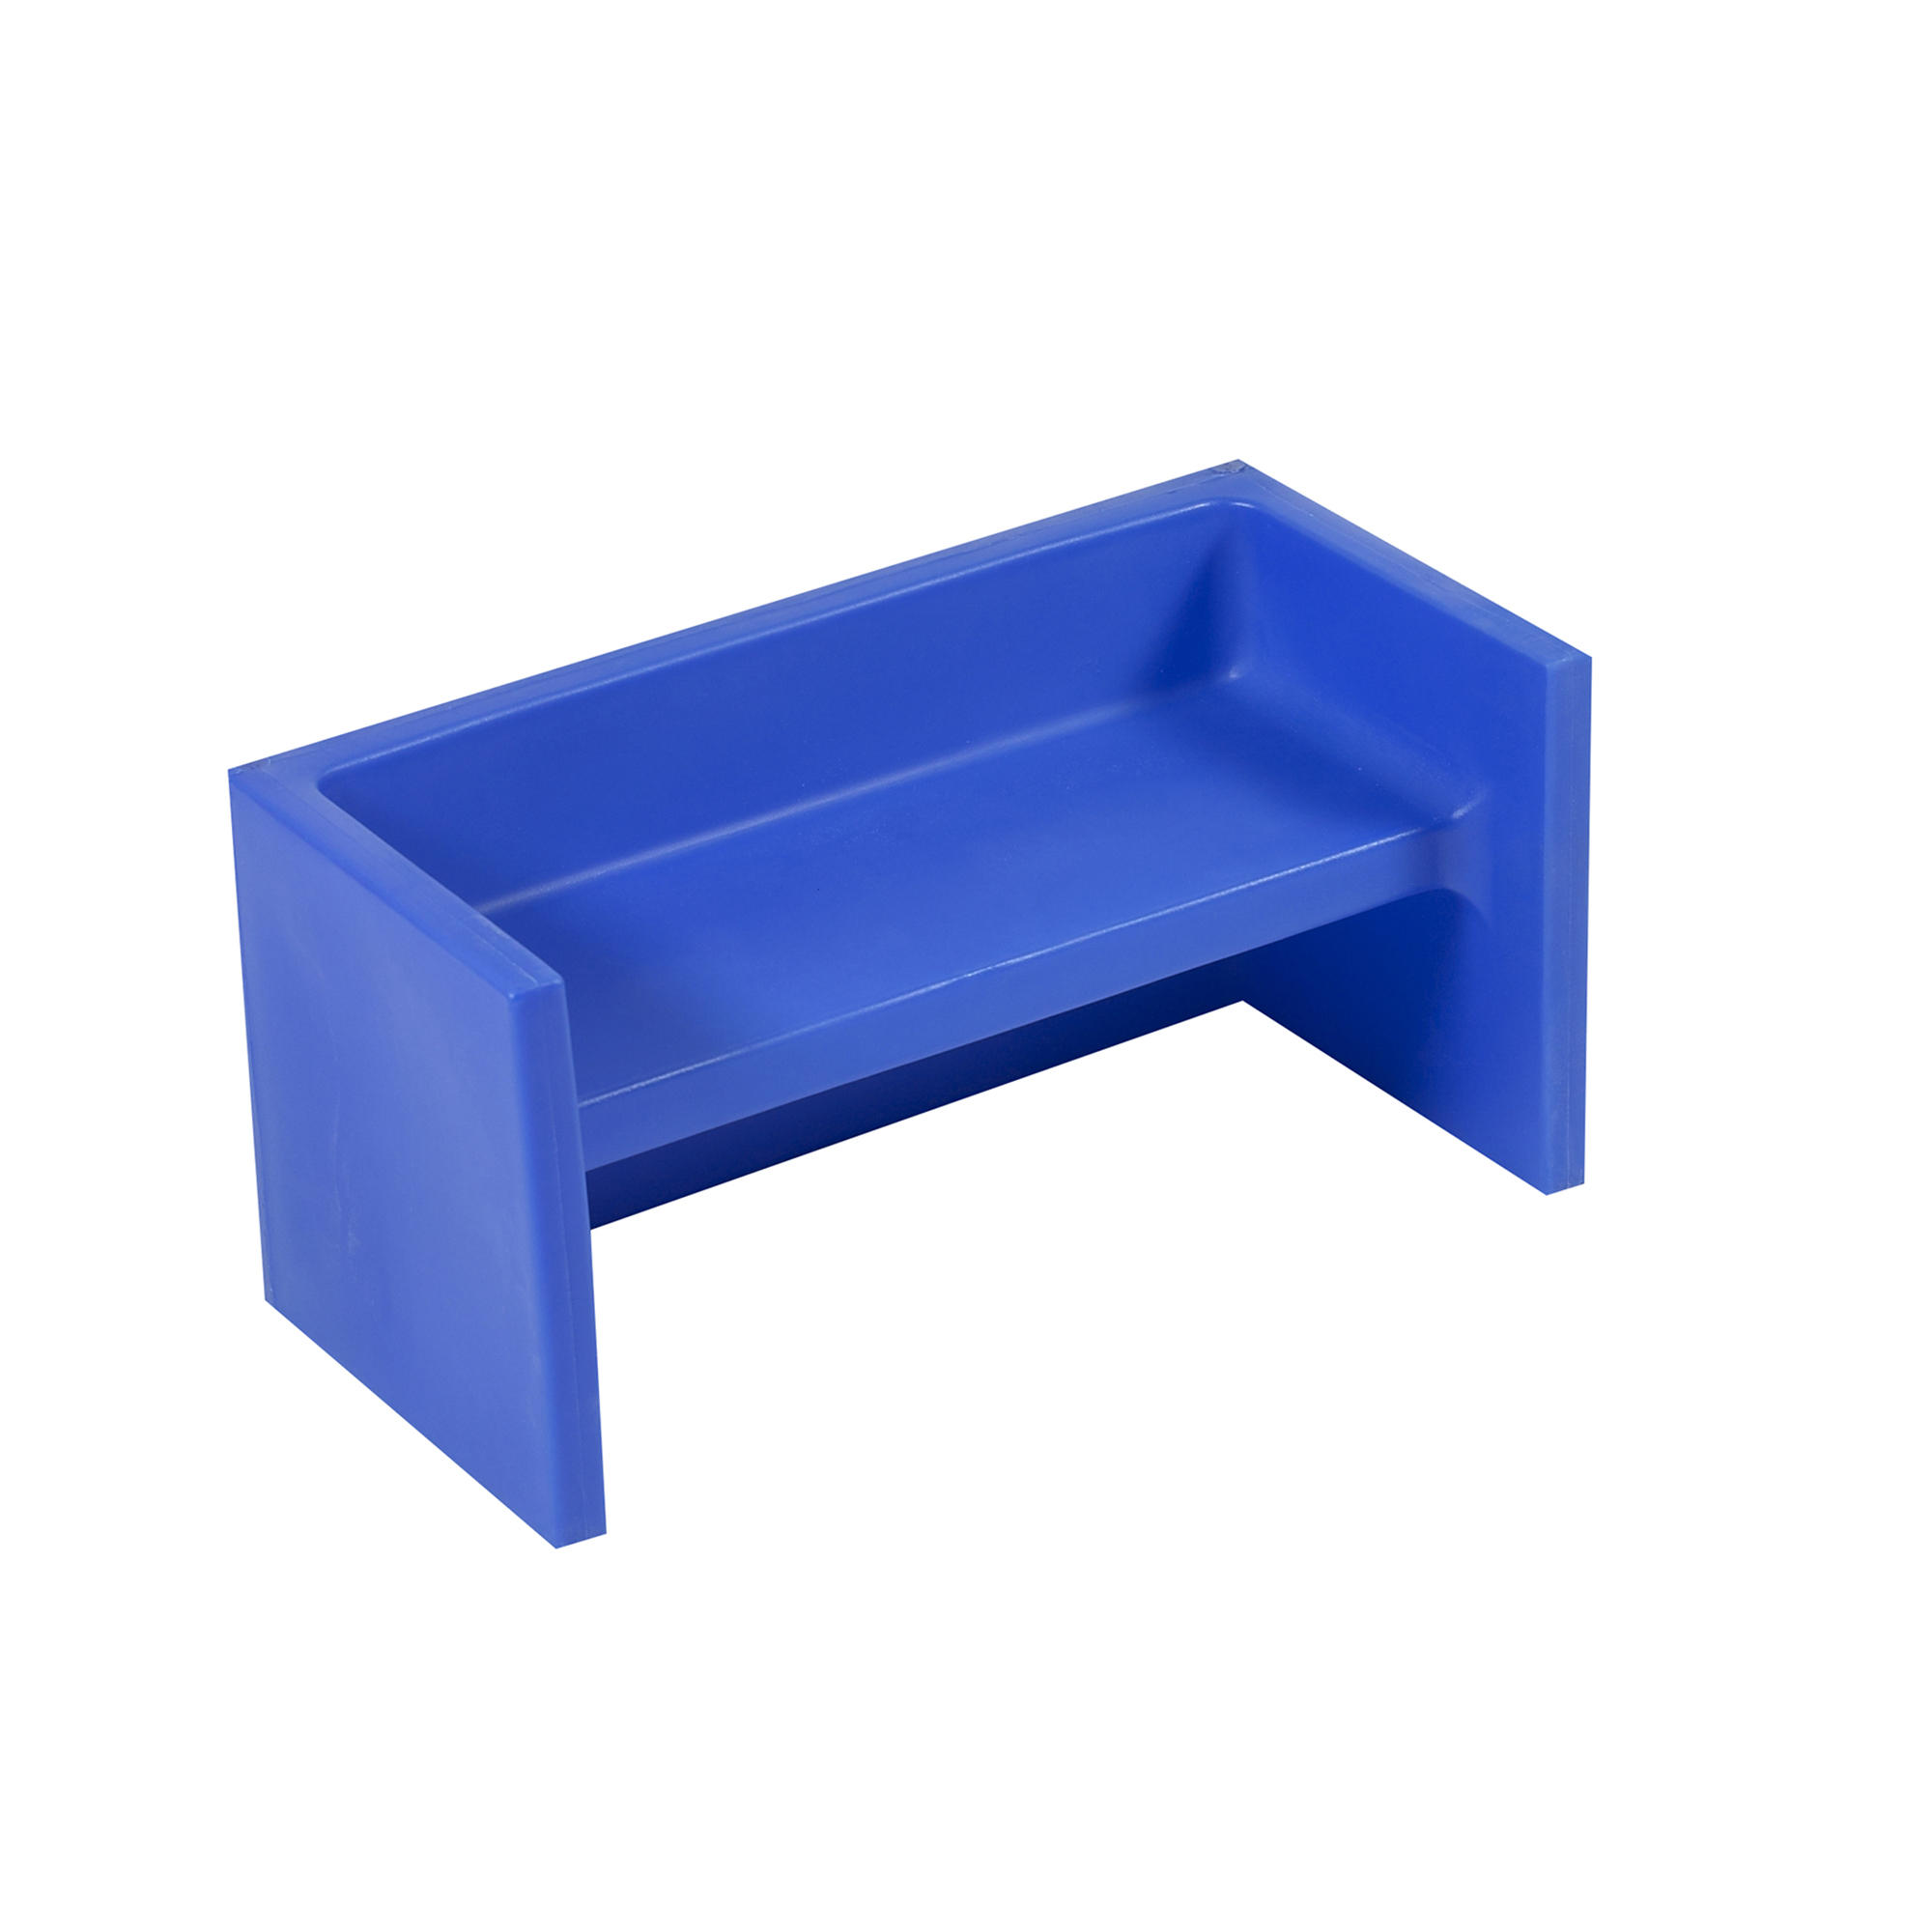 Adapta-Bench® - Blue